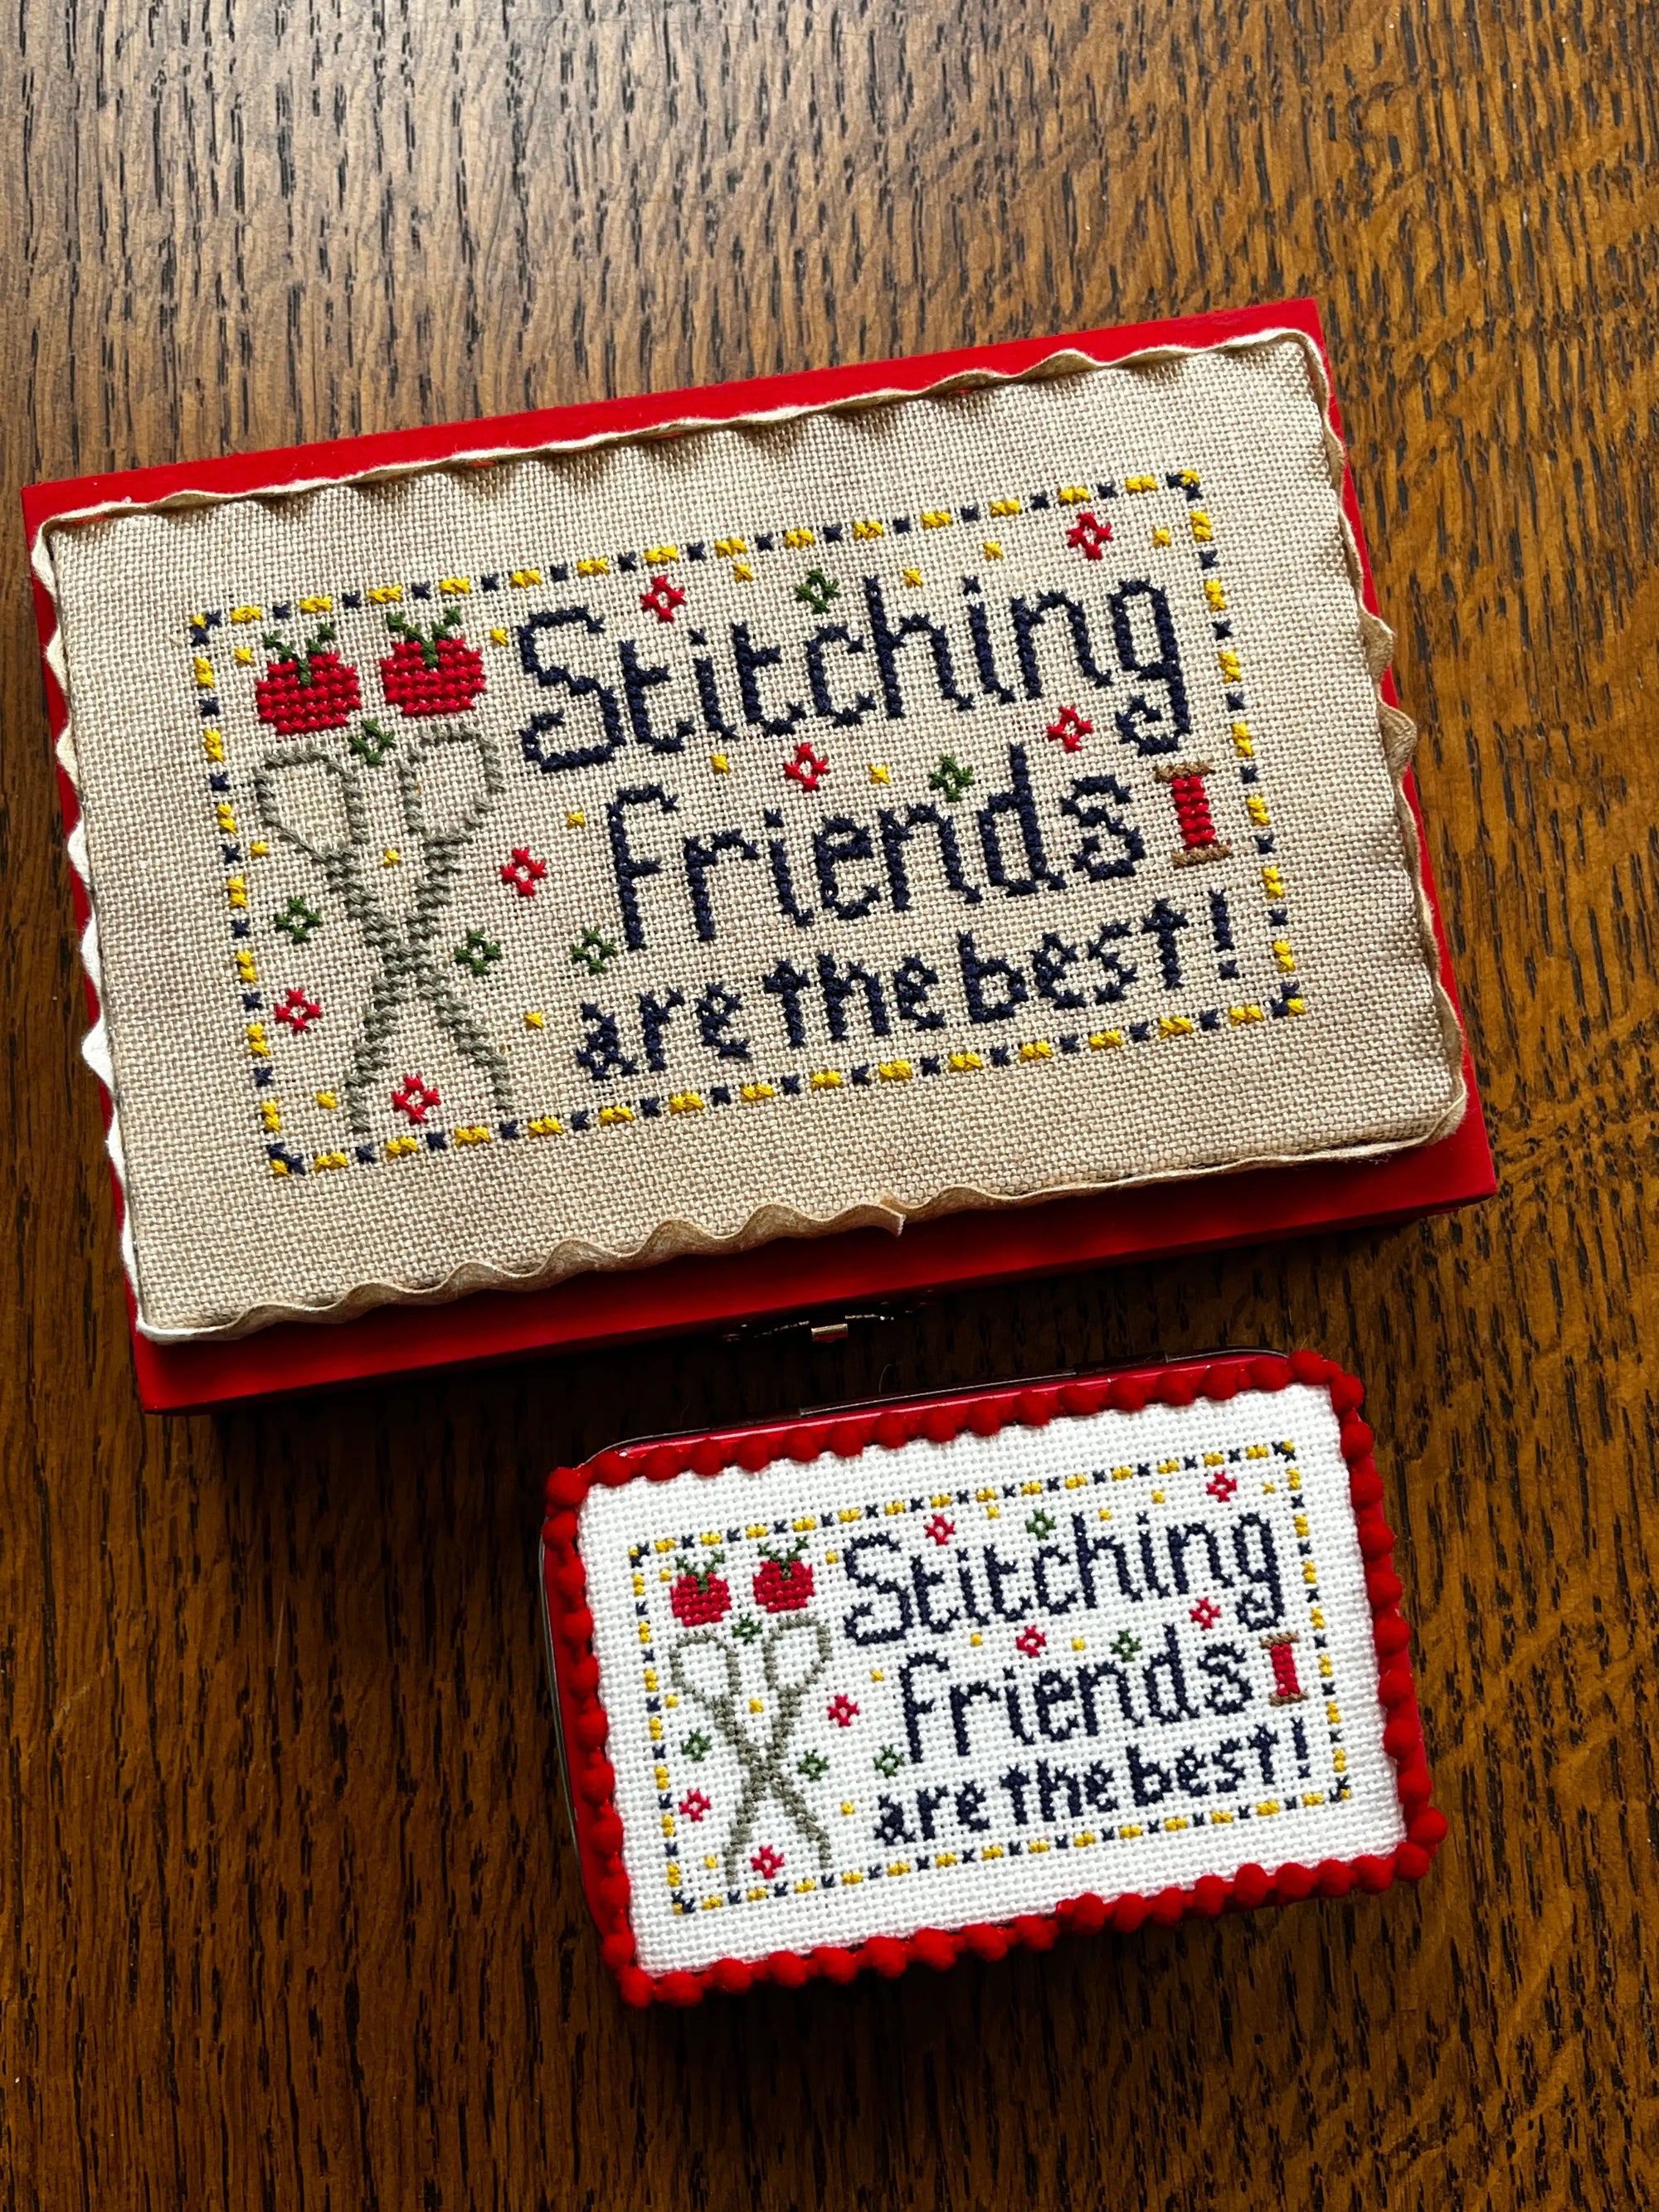 Stitching Friends by Colorado Cross Stitcher Colorado Cross Stitcher